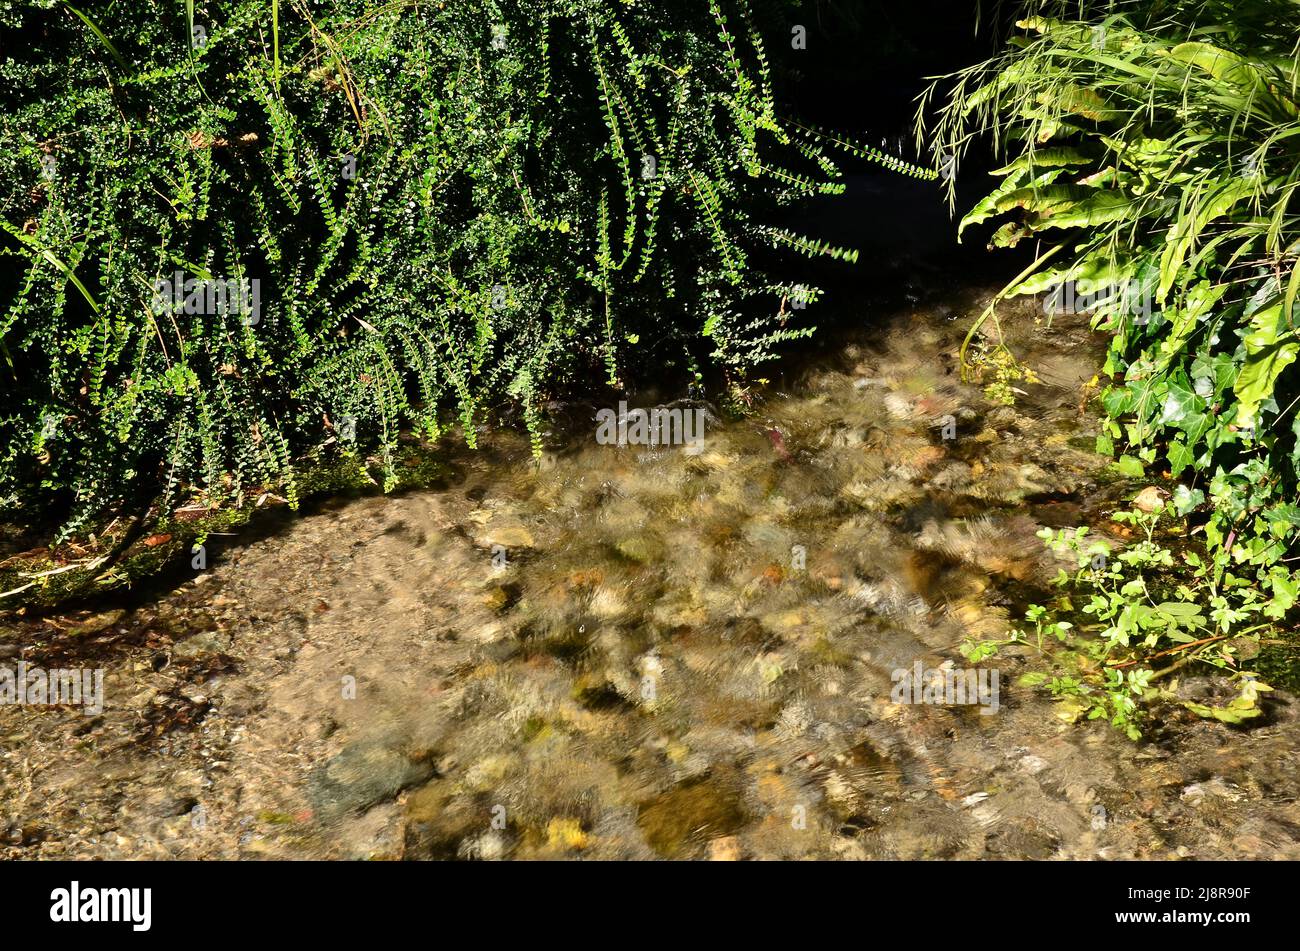 Bubbling stream in Litton Cheney village near Dorchester in West Dorset, UK Stock Photo